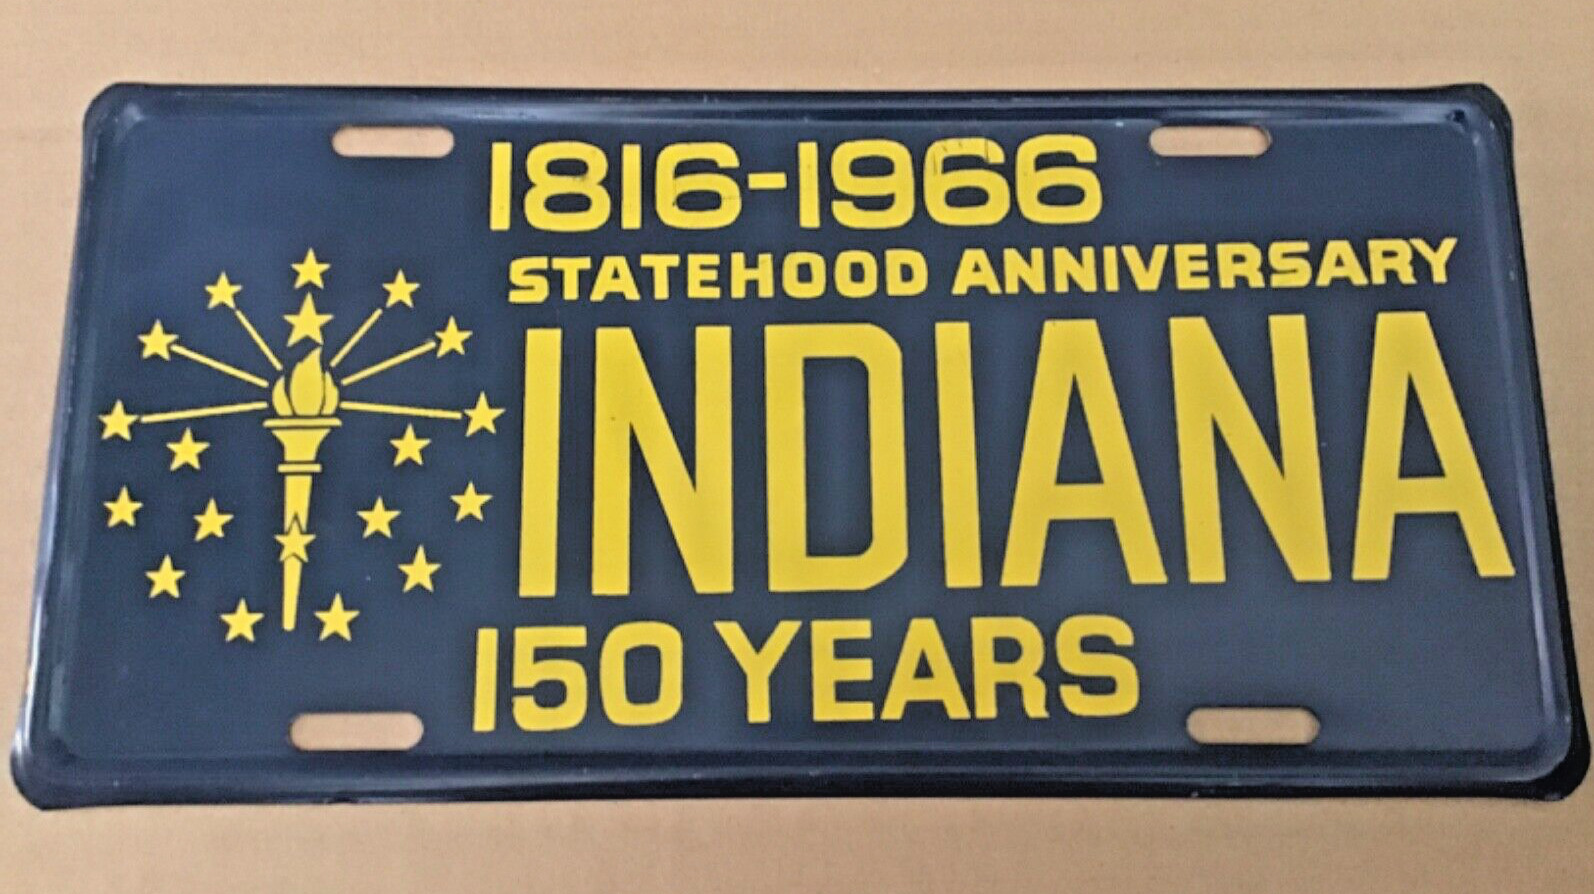 Indiana 150 yrs Statehood License Plate Booster Vintage misaligned steel